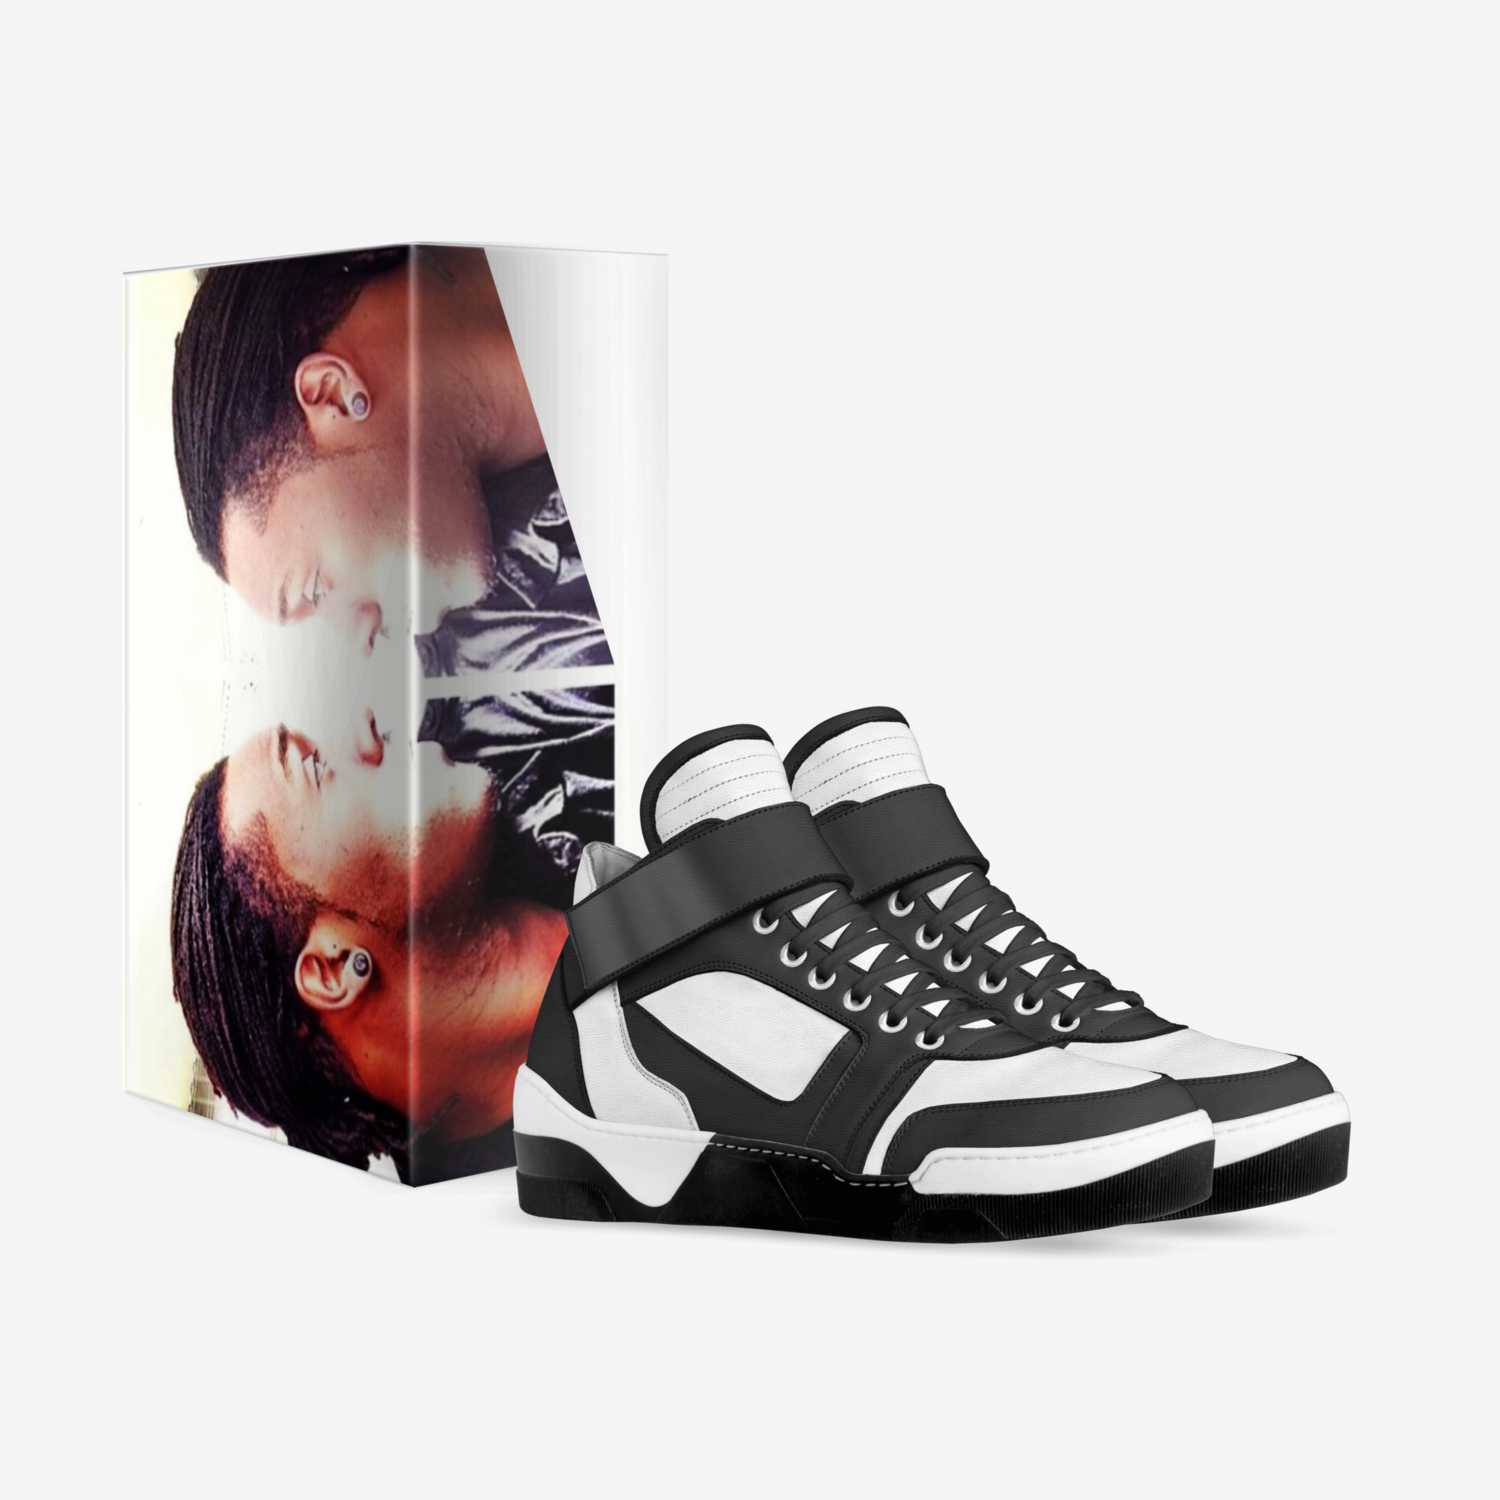 MistaLV custom made in Italy shoes by Ayrehaud Jones | Box view